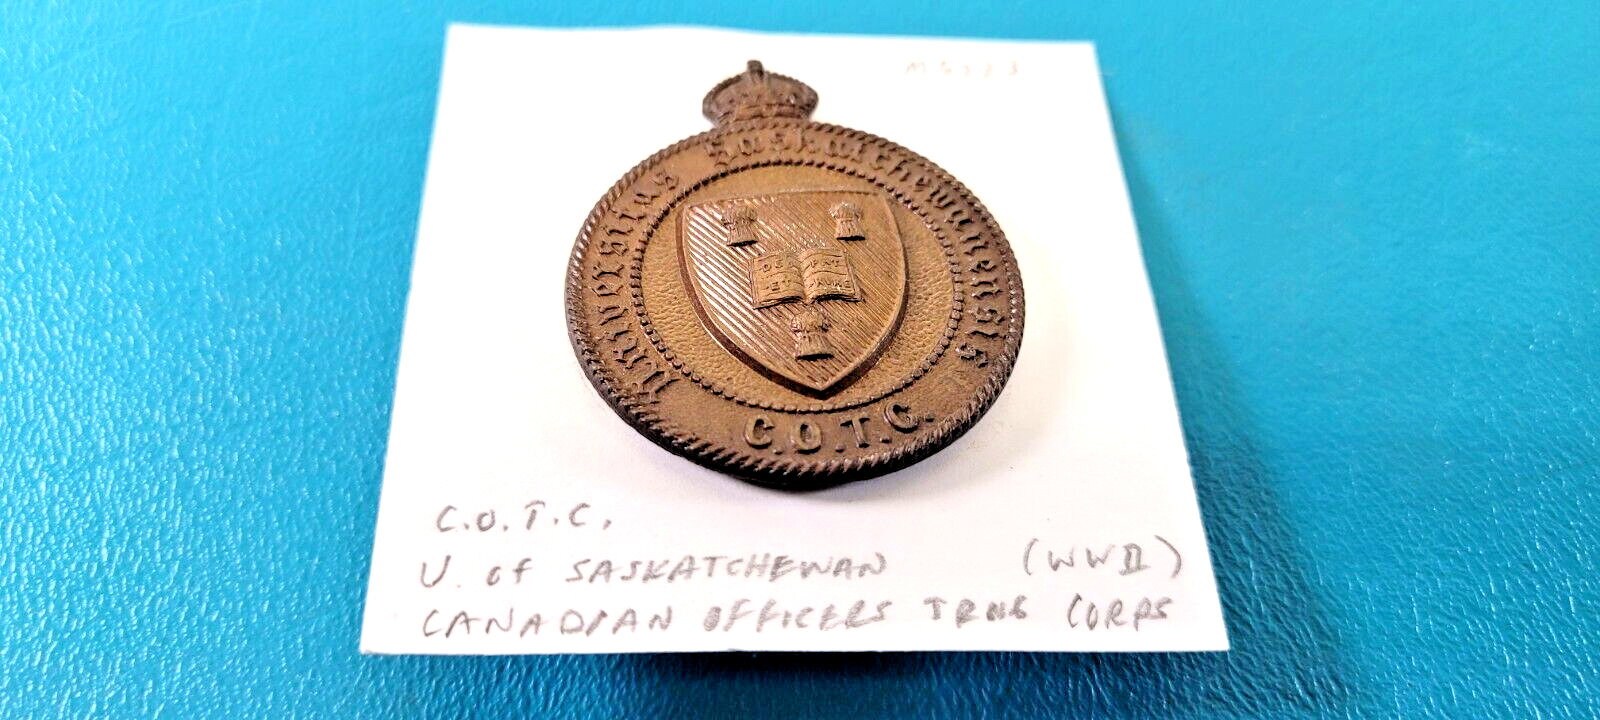 WWII Univ of Saskatchewan Canadian Officers Training Corps Badge Cap COTC Halmrk